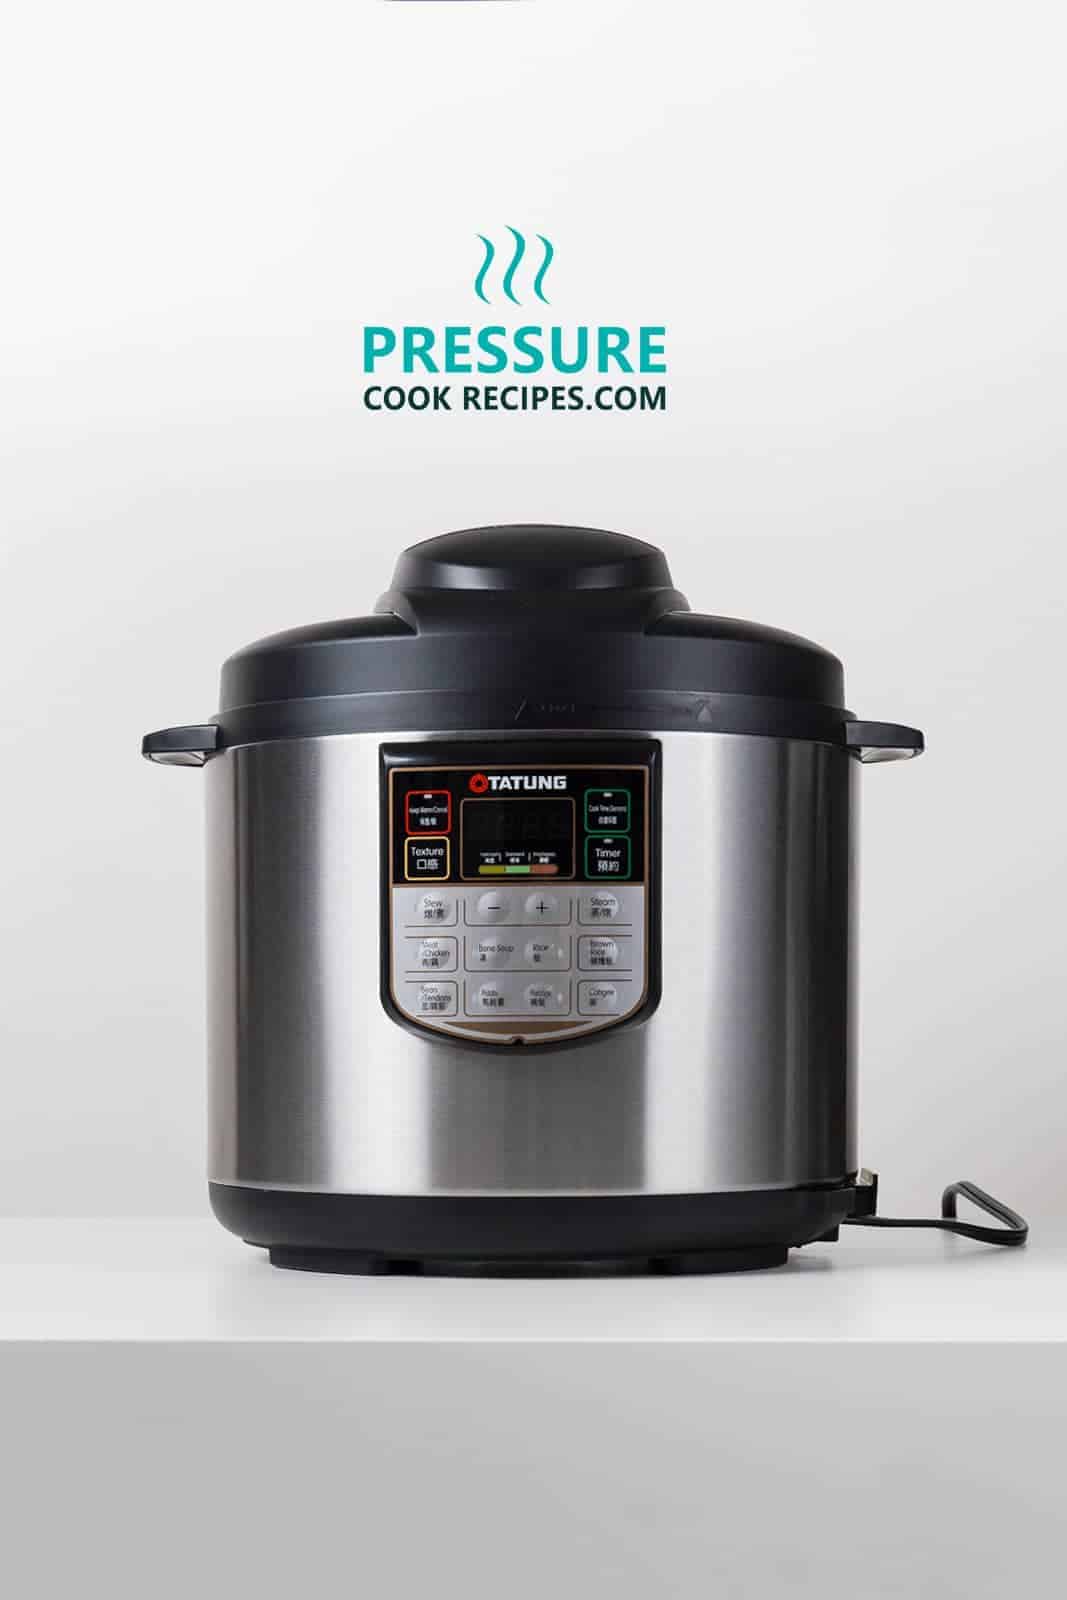 https://www.pressurecookrecipes.com/wp-content/uploads/2016/08/TatungTPC-6LB-Pressure-Cooker.jpg